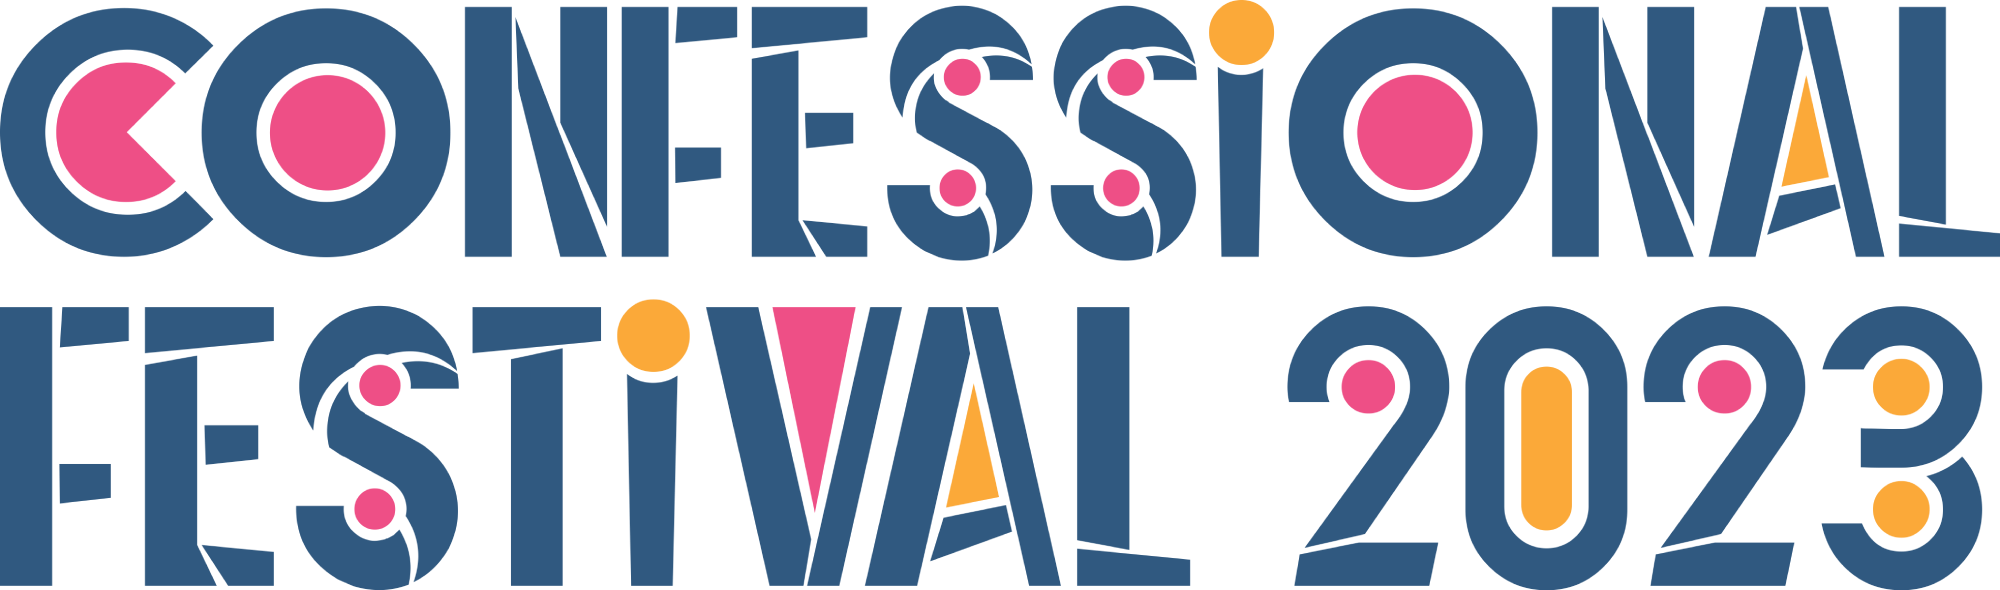 Confessional Festival